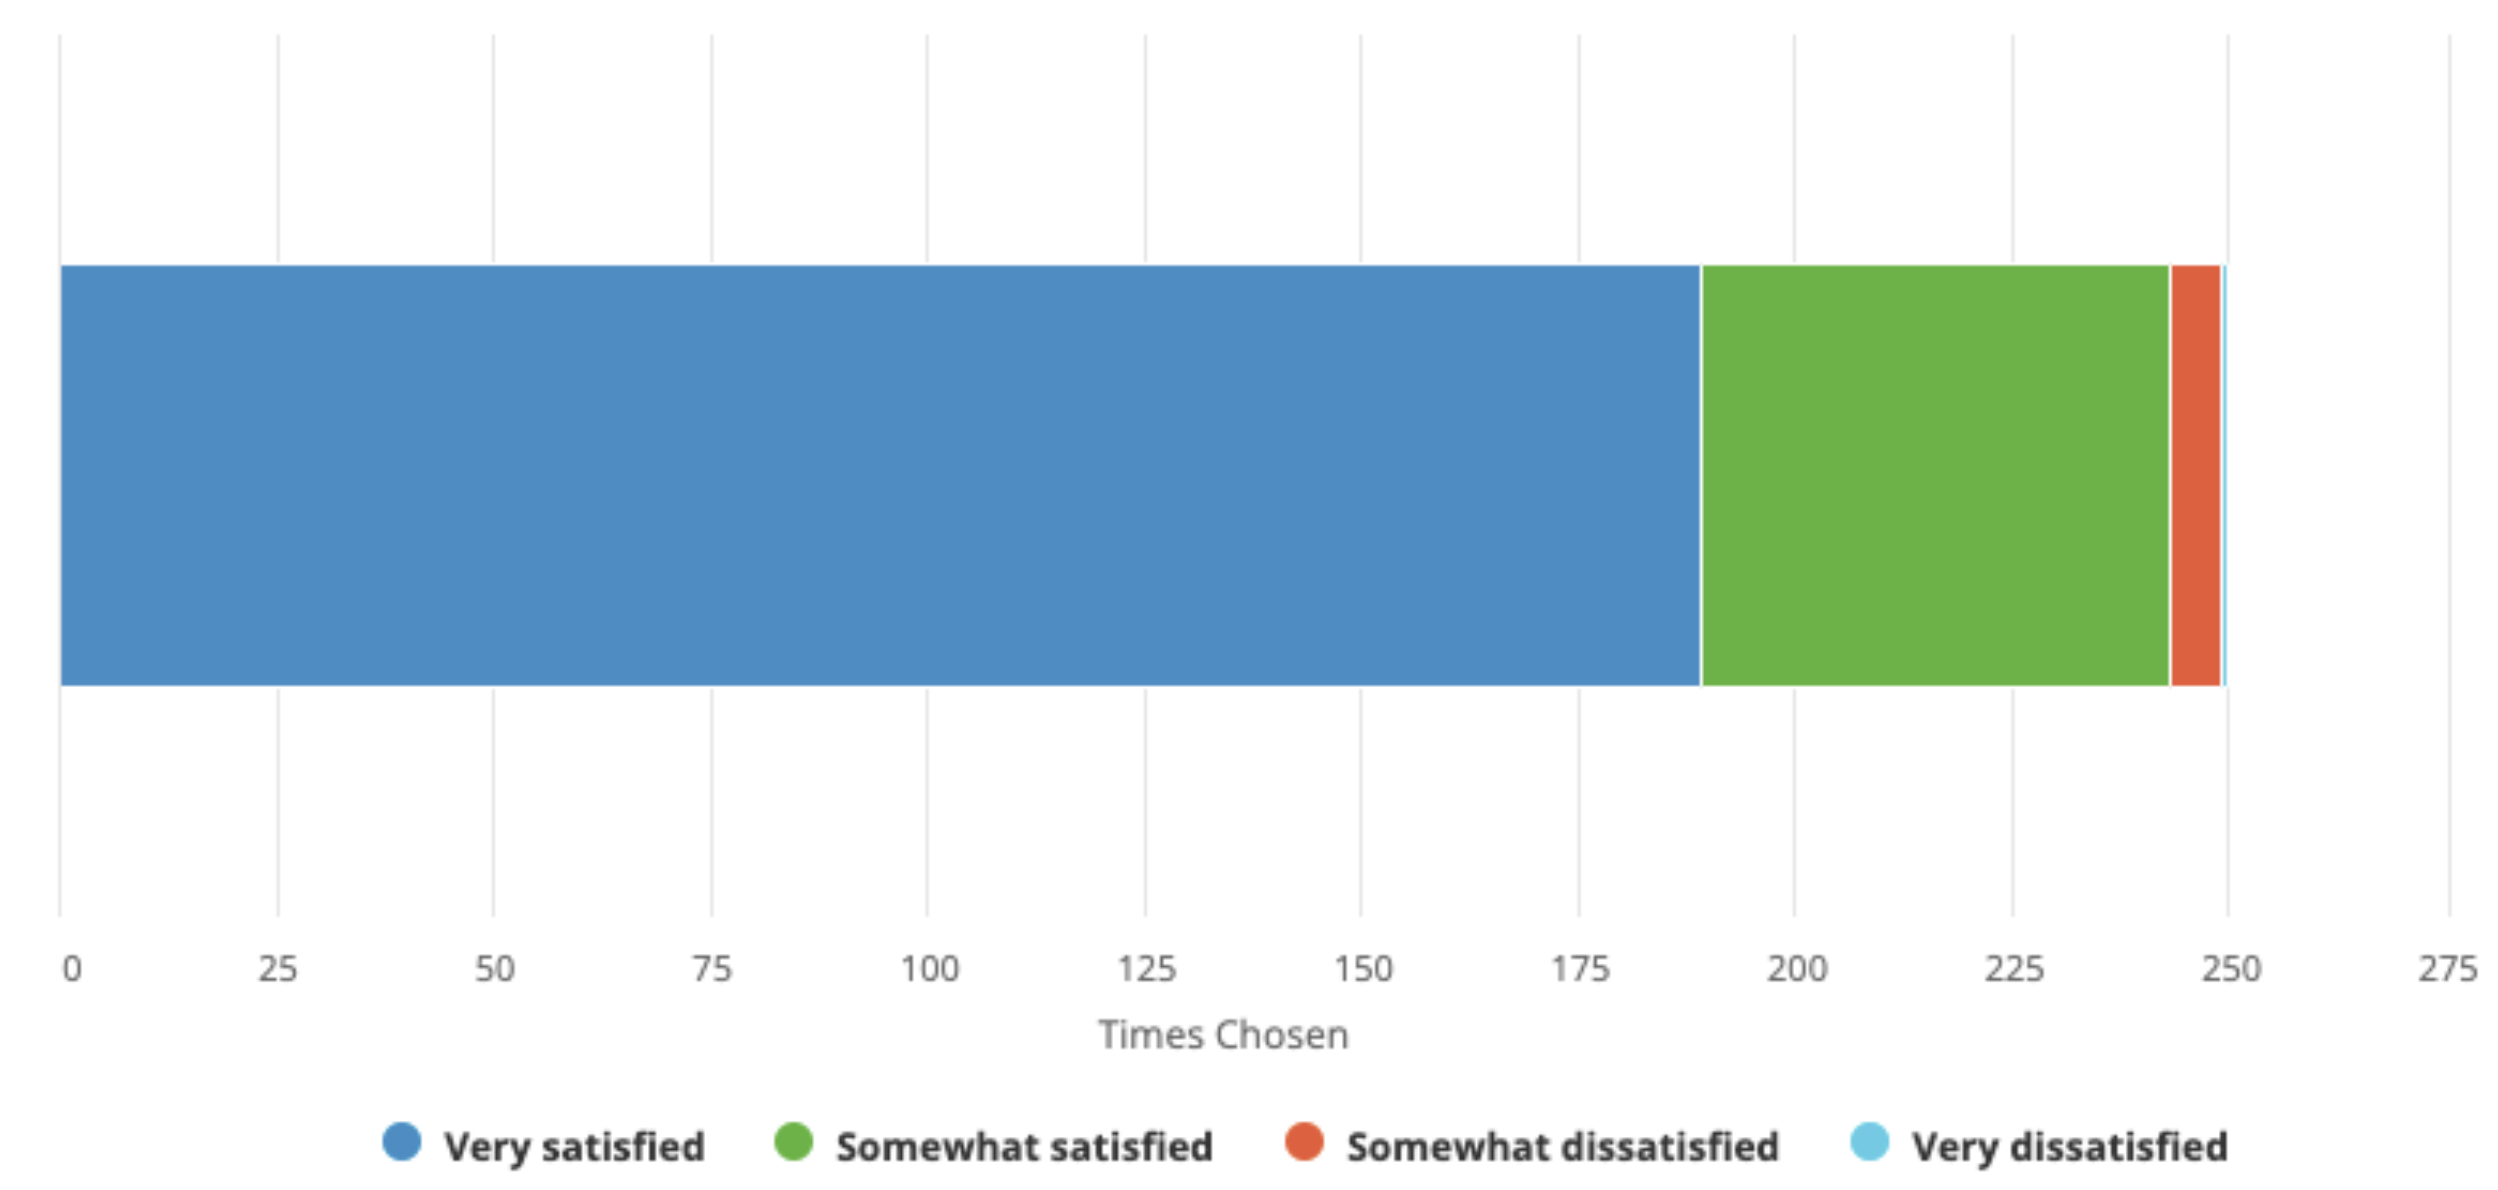 peeringdb 2021 user survey overall satisfaction